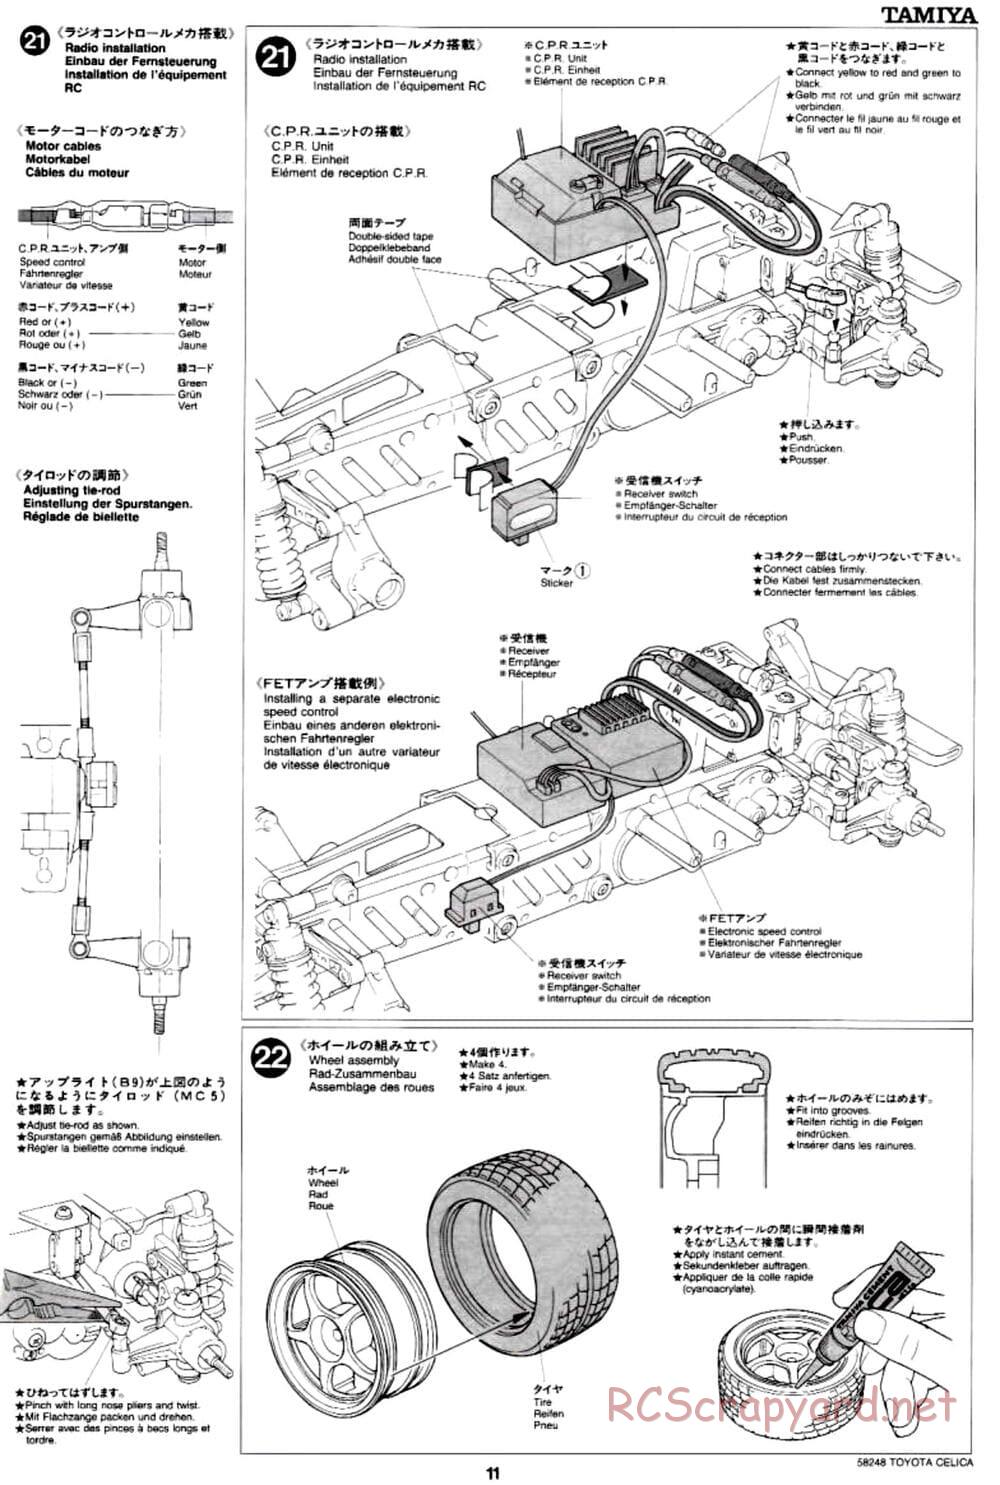 Tamiya - Toyota Celica - FF-02 Chassis - Manual - Page 11